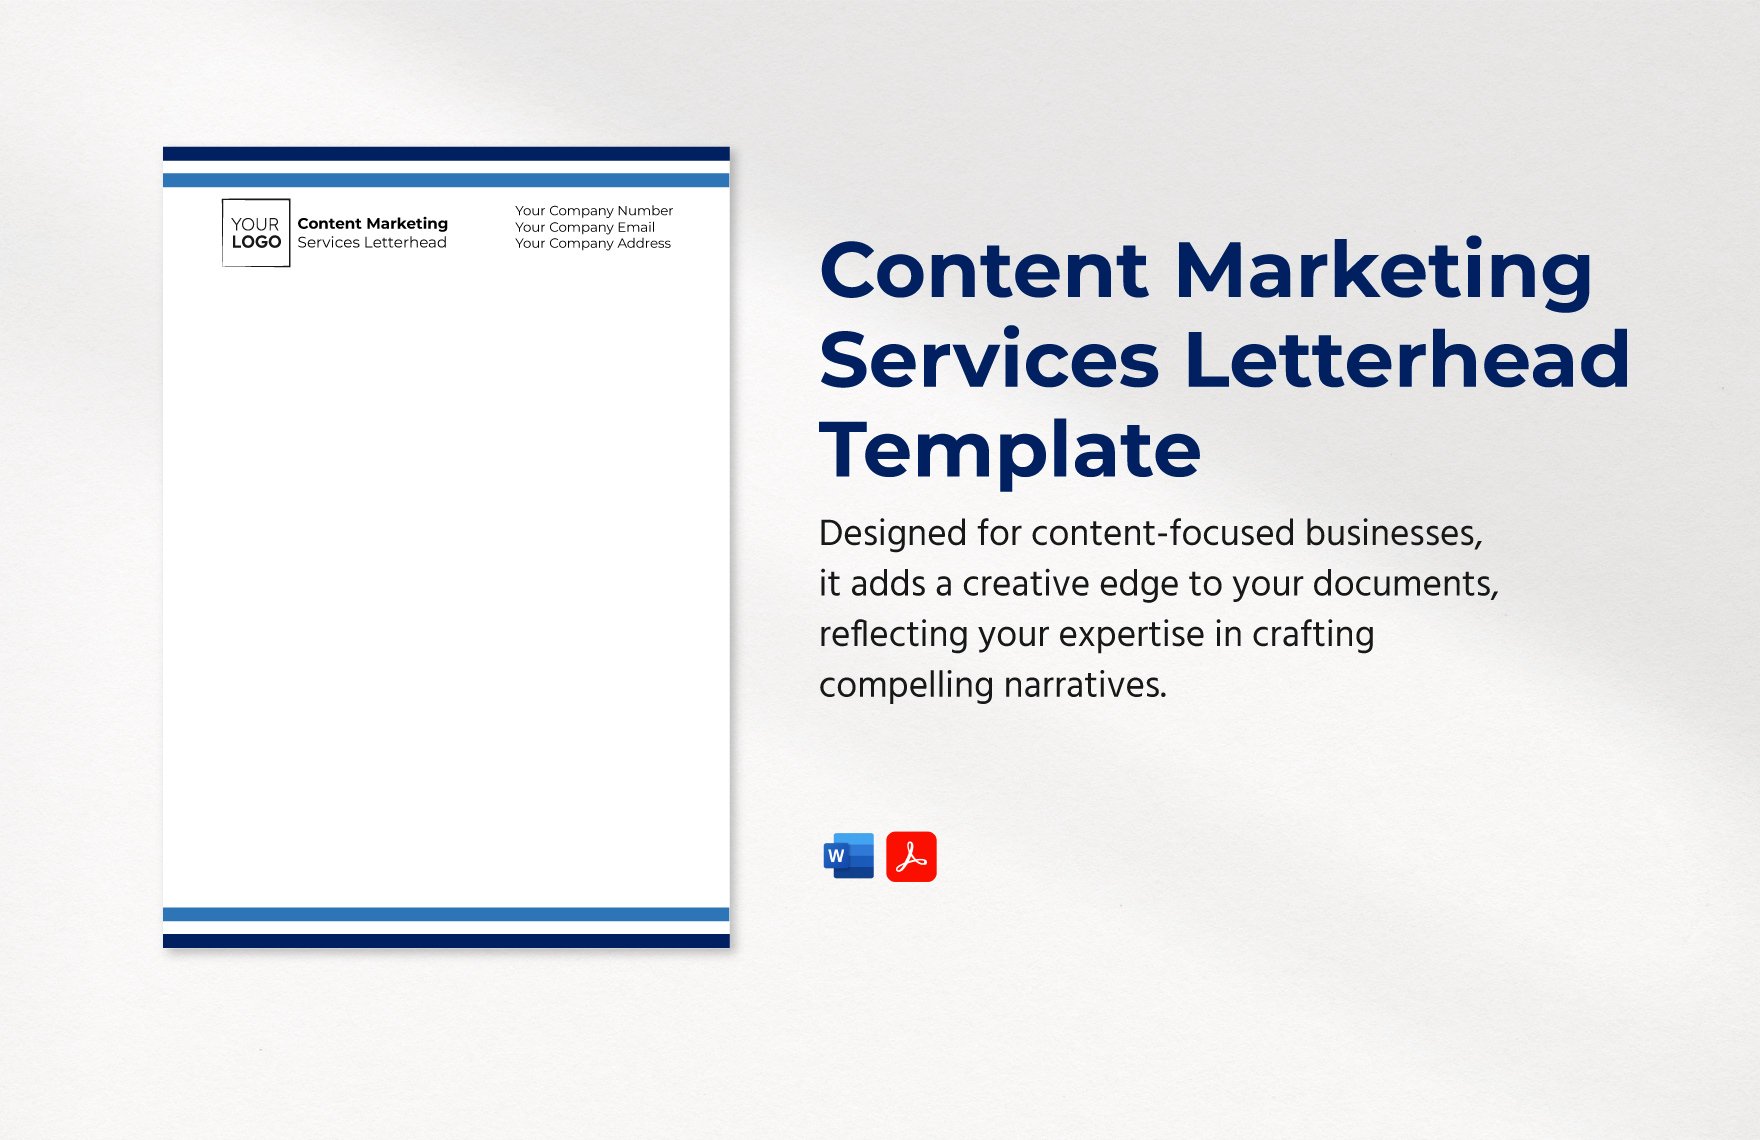 Content Marketing Services Letterhead Template